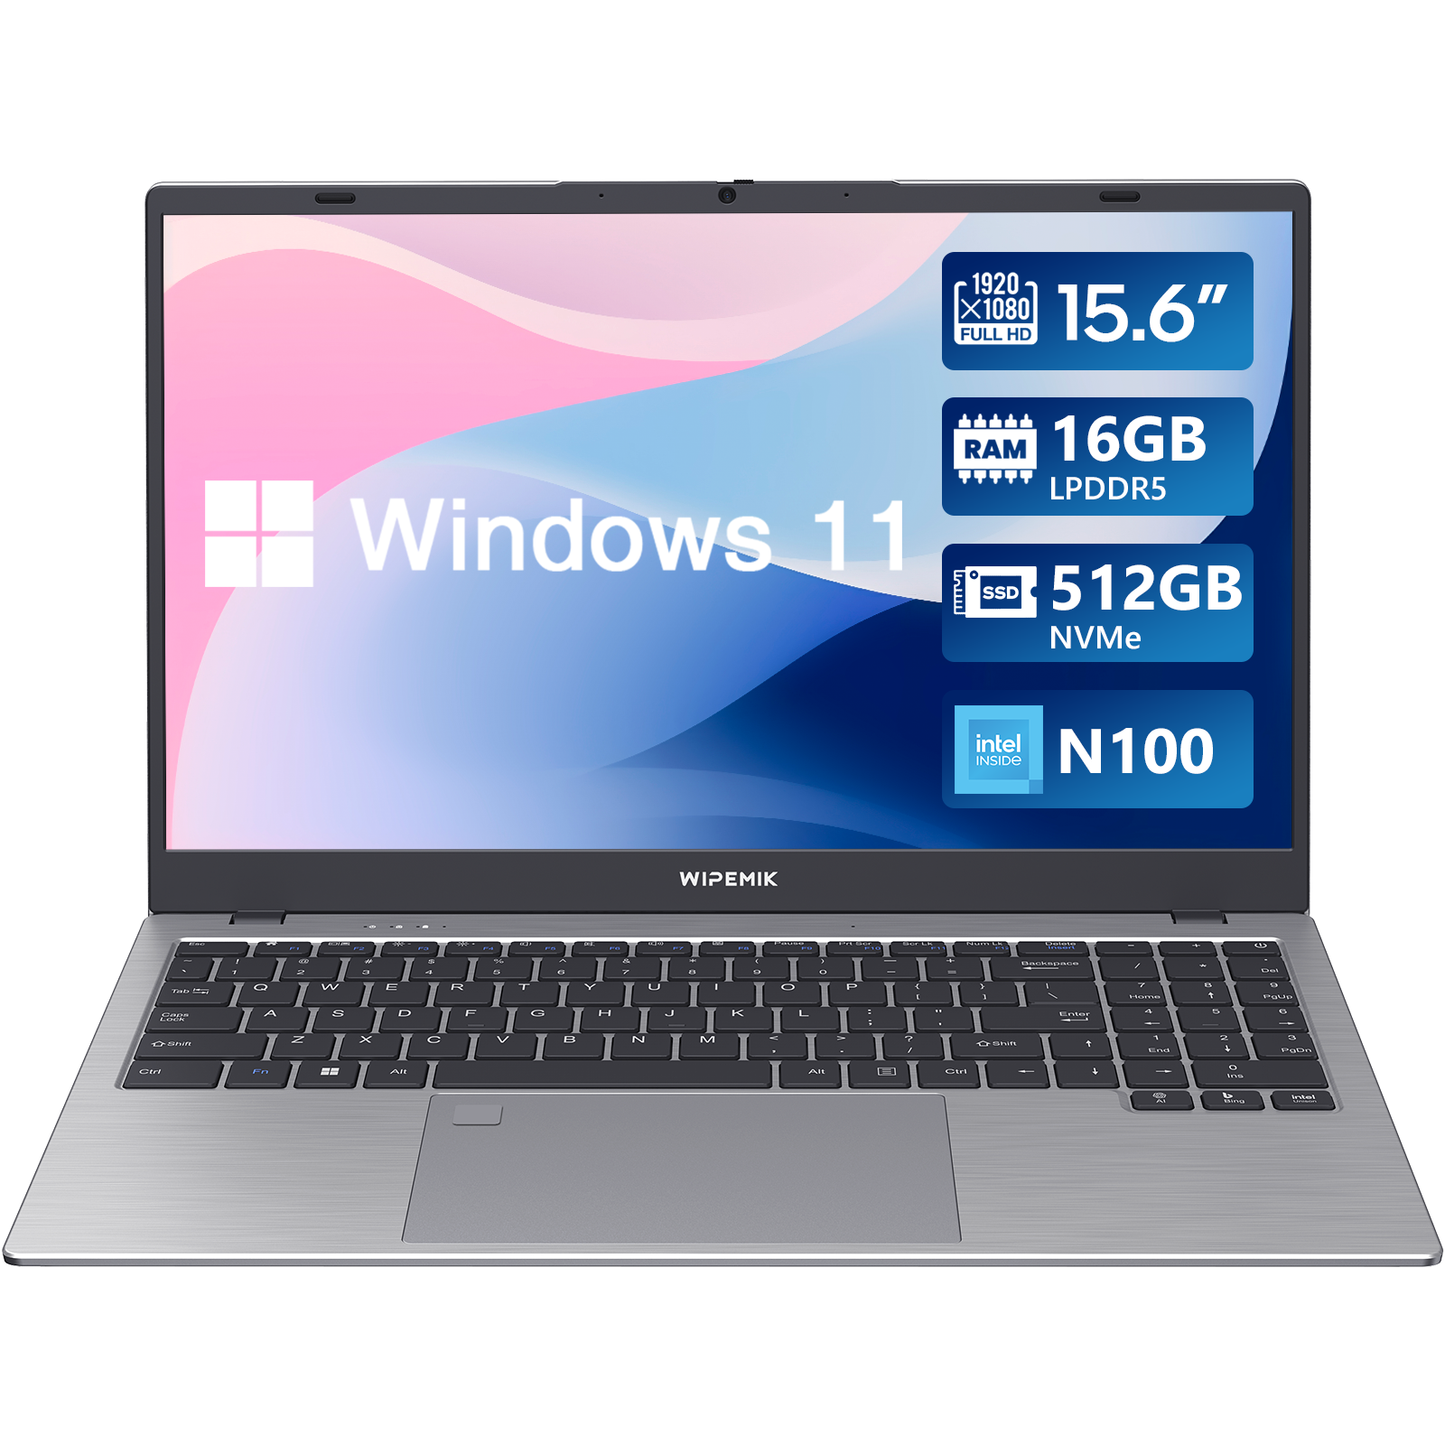 WIPEMIK Laptop Computer, 16GB LPDDR5 RAM Laptop 512GB NVMe SSD, Intel Quad-Core N100, 15.6 Inch 1080P IPS Display Windows 11 Pro Laptops, WiFi 6, BT 5.2, RJ45 Ethernet, Fingerprint, USB Type-C